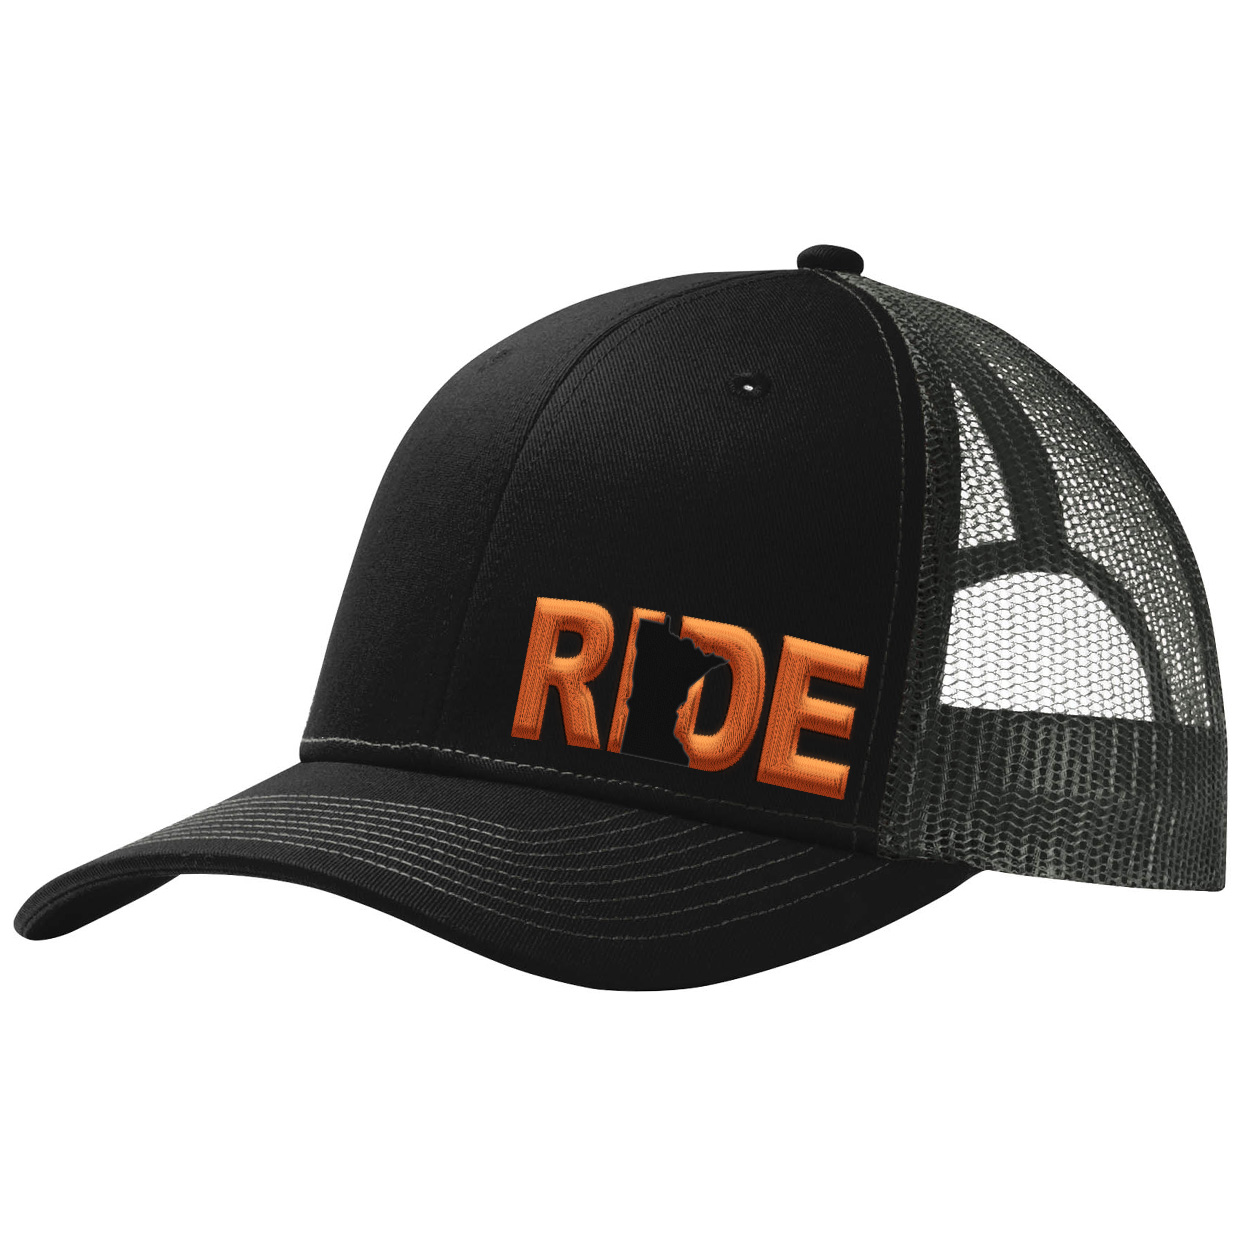 Ride Minnesota Night Out Pro Embroidered Snapback Trucker Hat Black/Orange